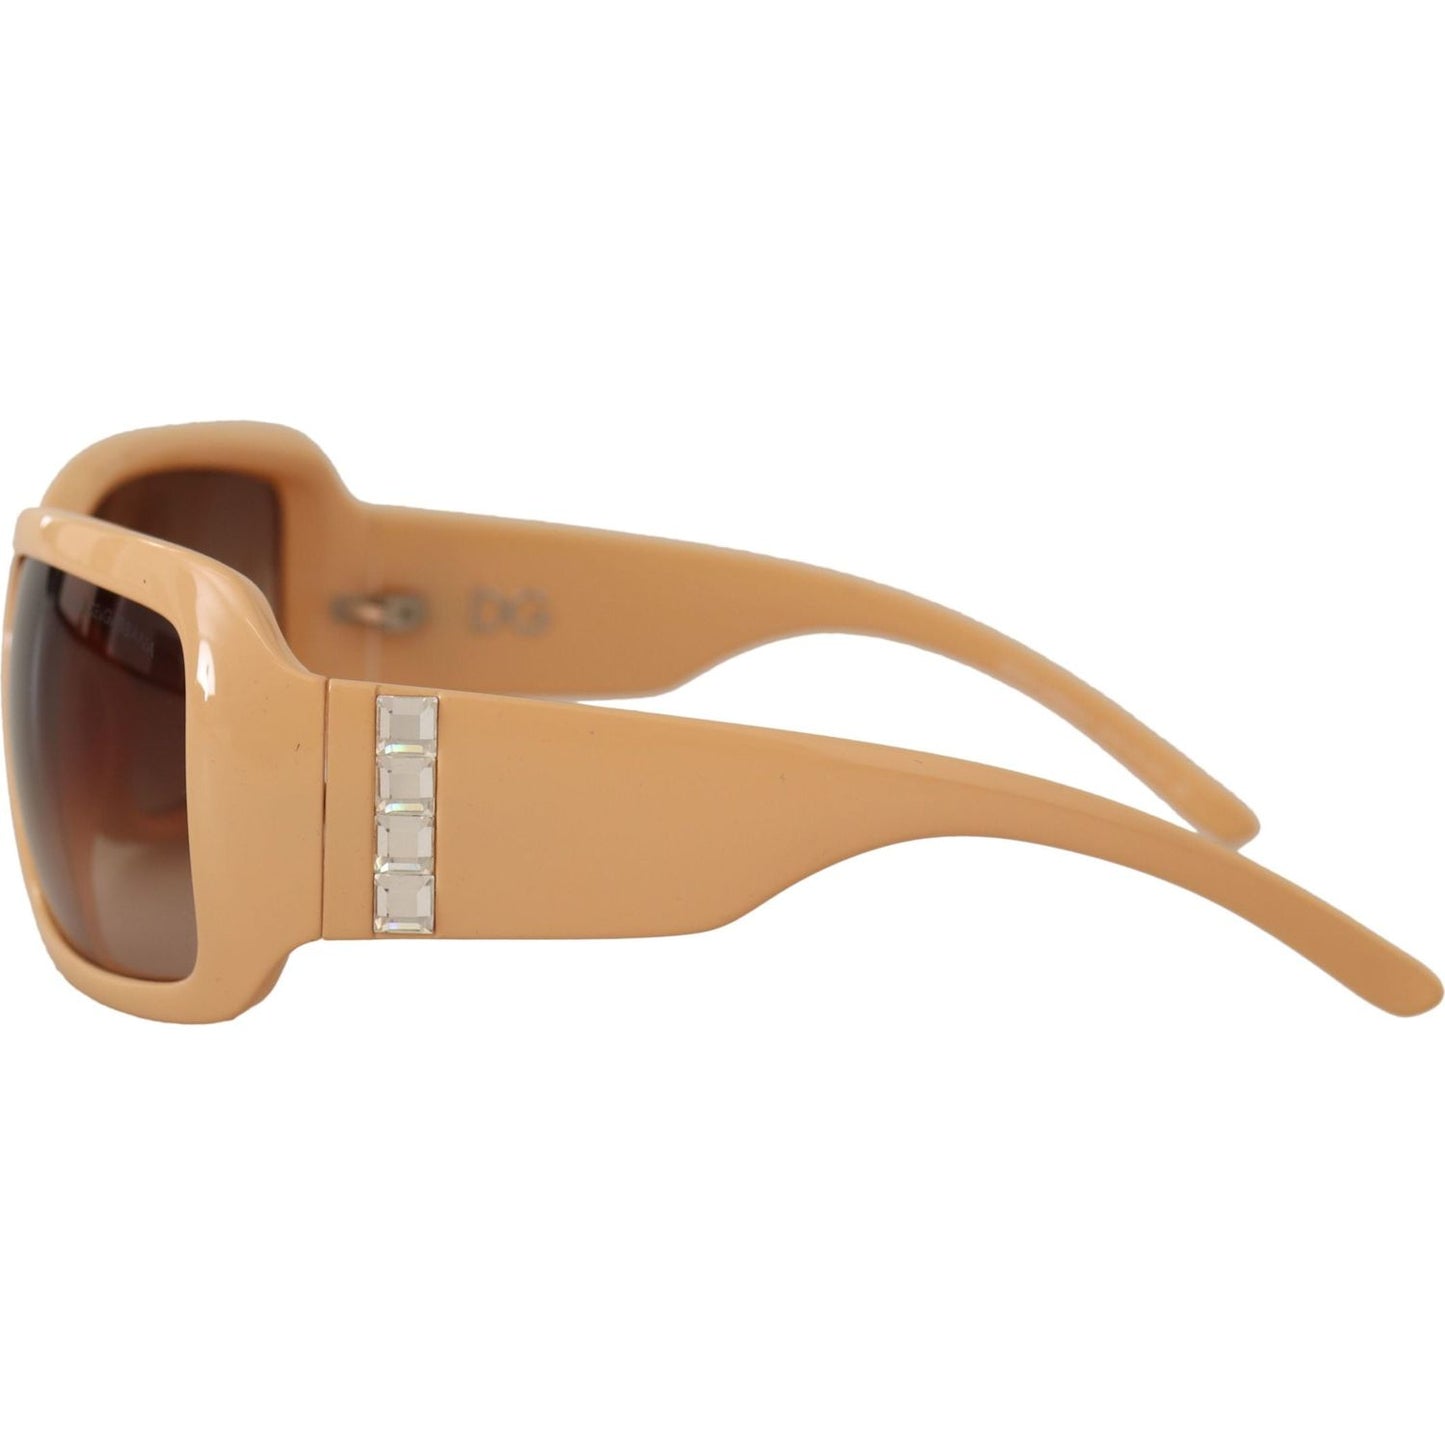 Dolce & Gabbana Chic Beige Urban Jungle Sunglasses for Women WOMAN SUNGLASSES beige-cat-eye-pvc-frame-brown-lenses-shades-sunglasses